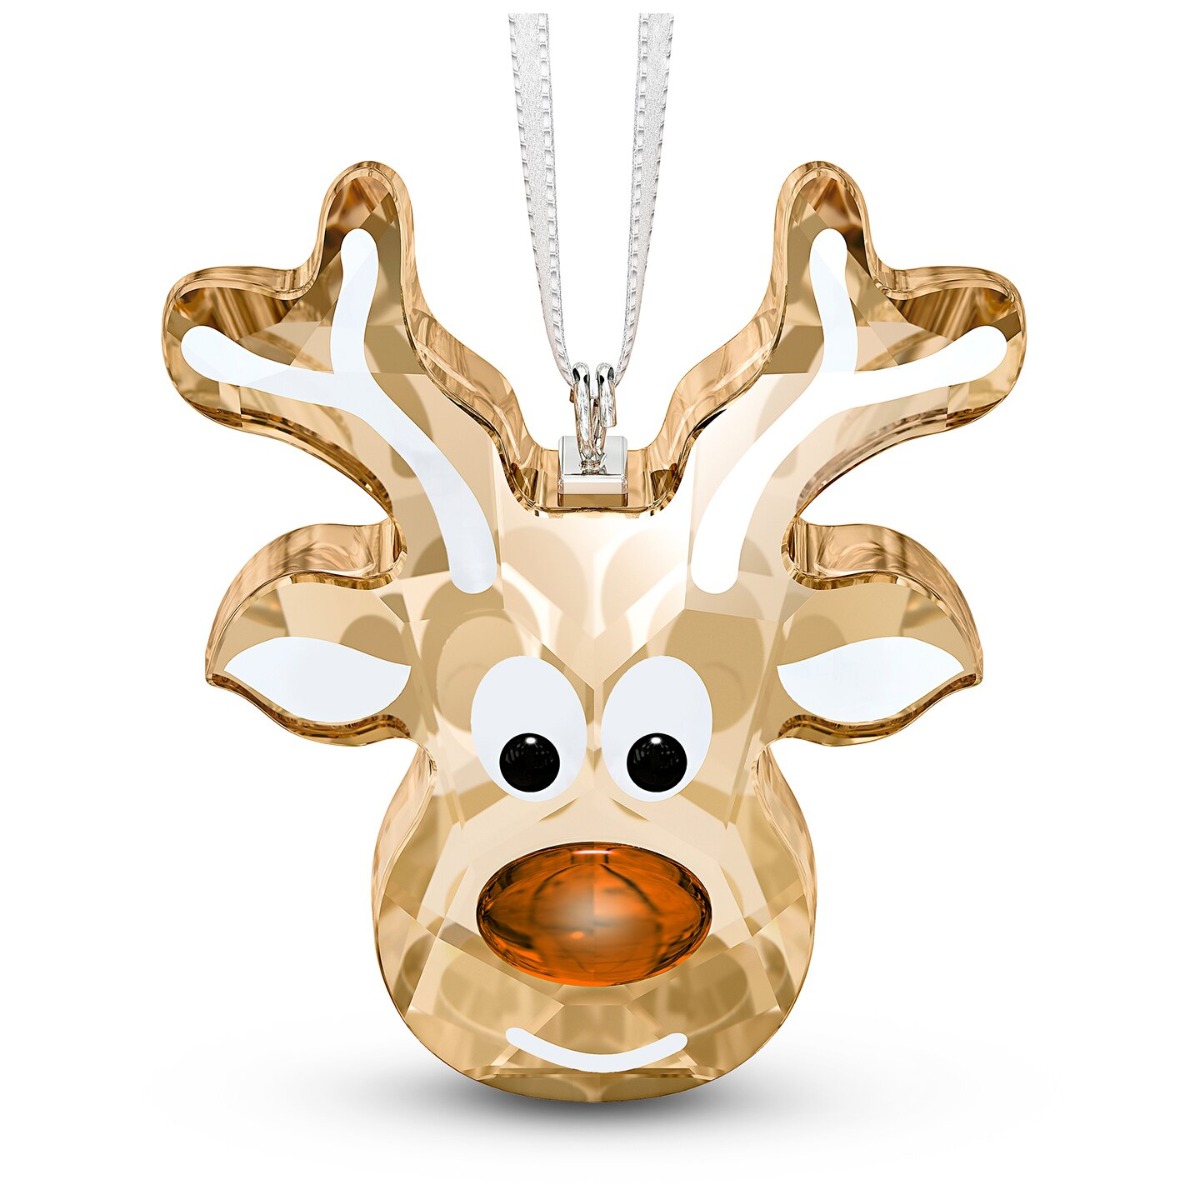 Swarovski Gingerbread Reindeer Ornament 5533944